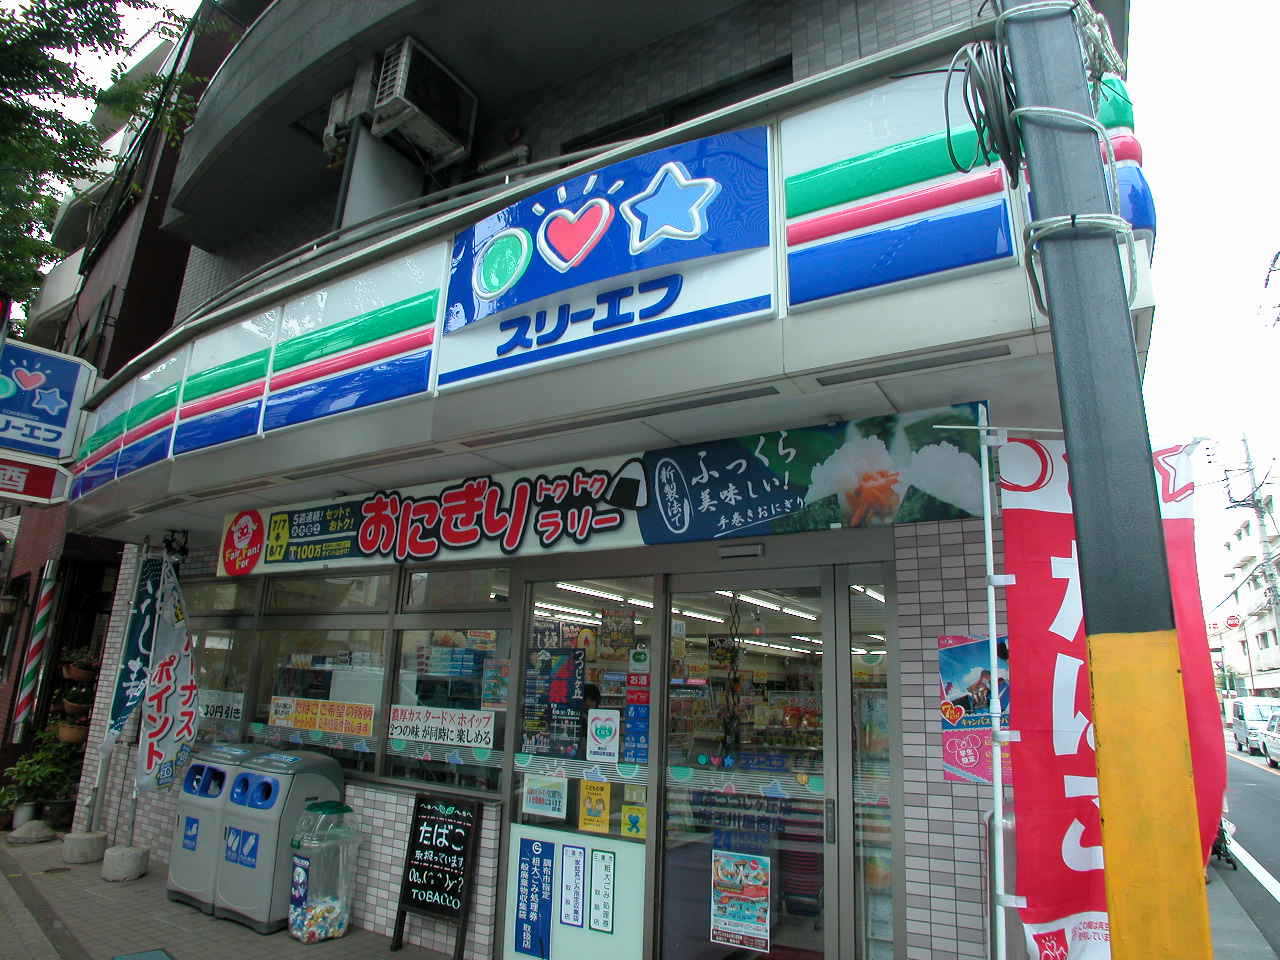 Convenience store. Three F Chofu tsutsujigaoka store (convenience store) to 225m